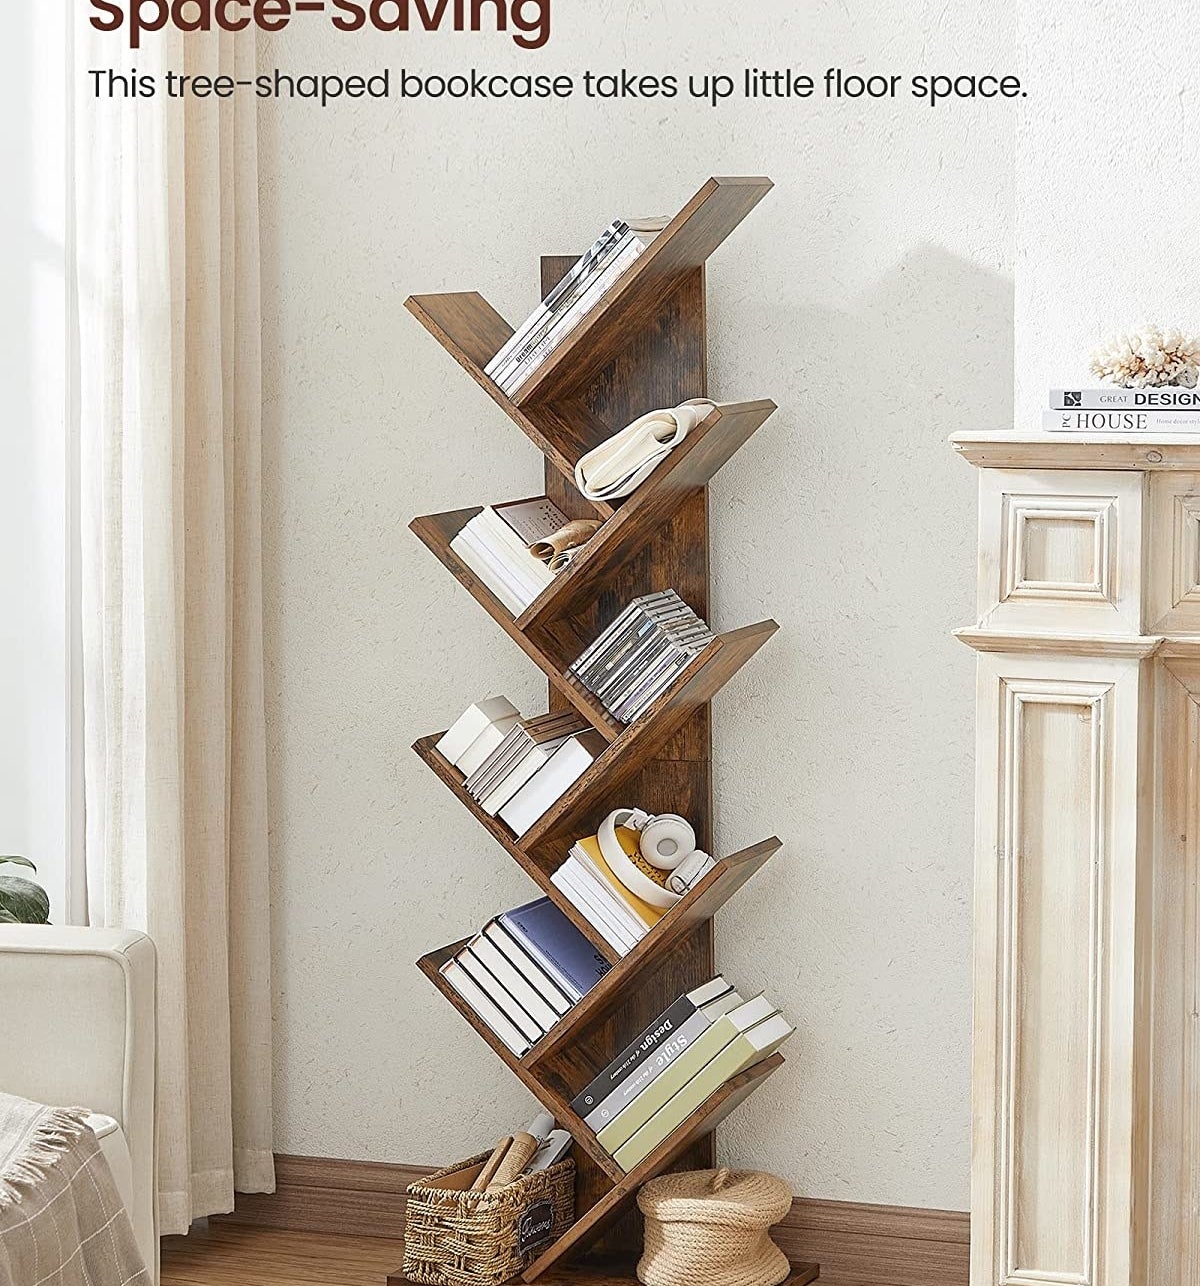 a freestanding bookshelf with angled shelves